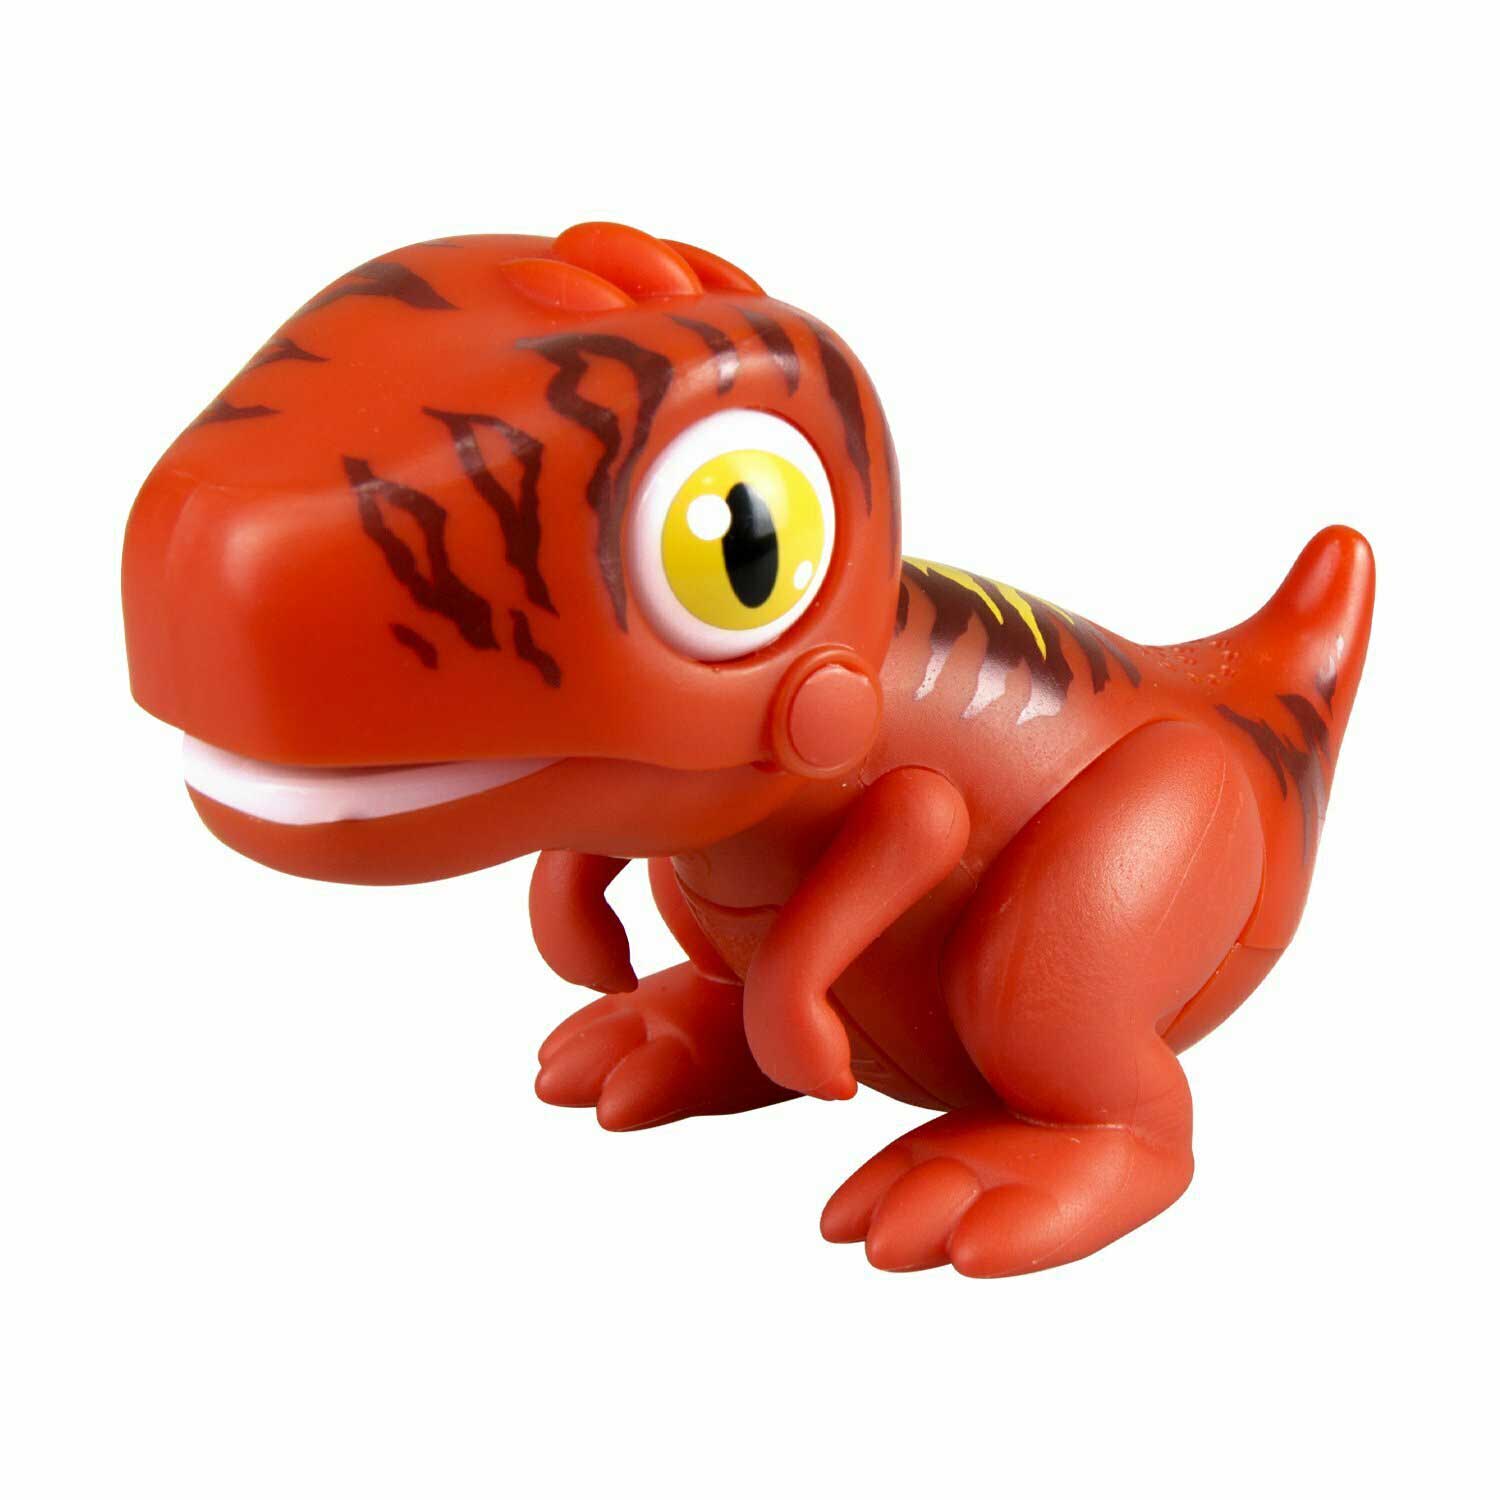 Динозавр Silverlit Gulliver Глупи красный арт.88581-1 silverlit хамелеон глупи оранжевый 88569 2